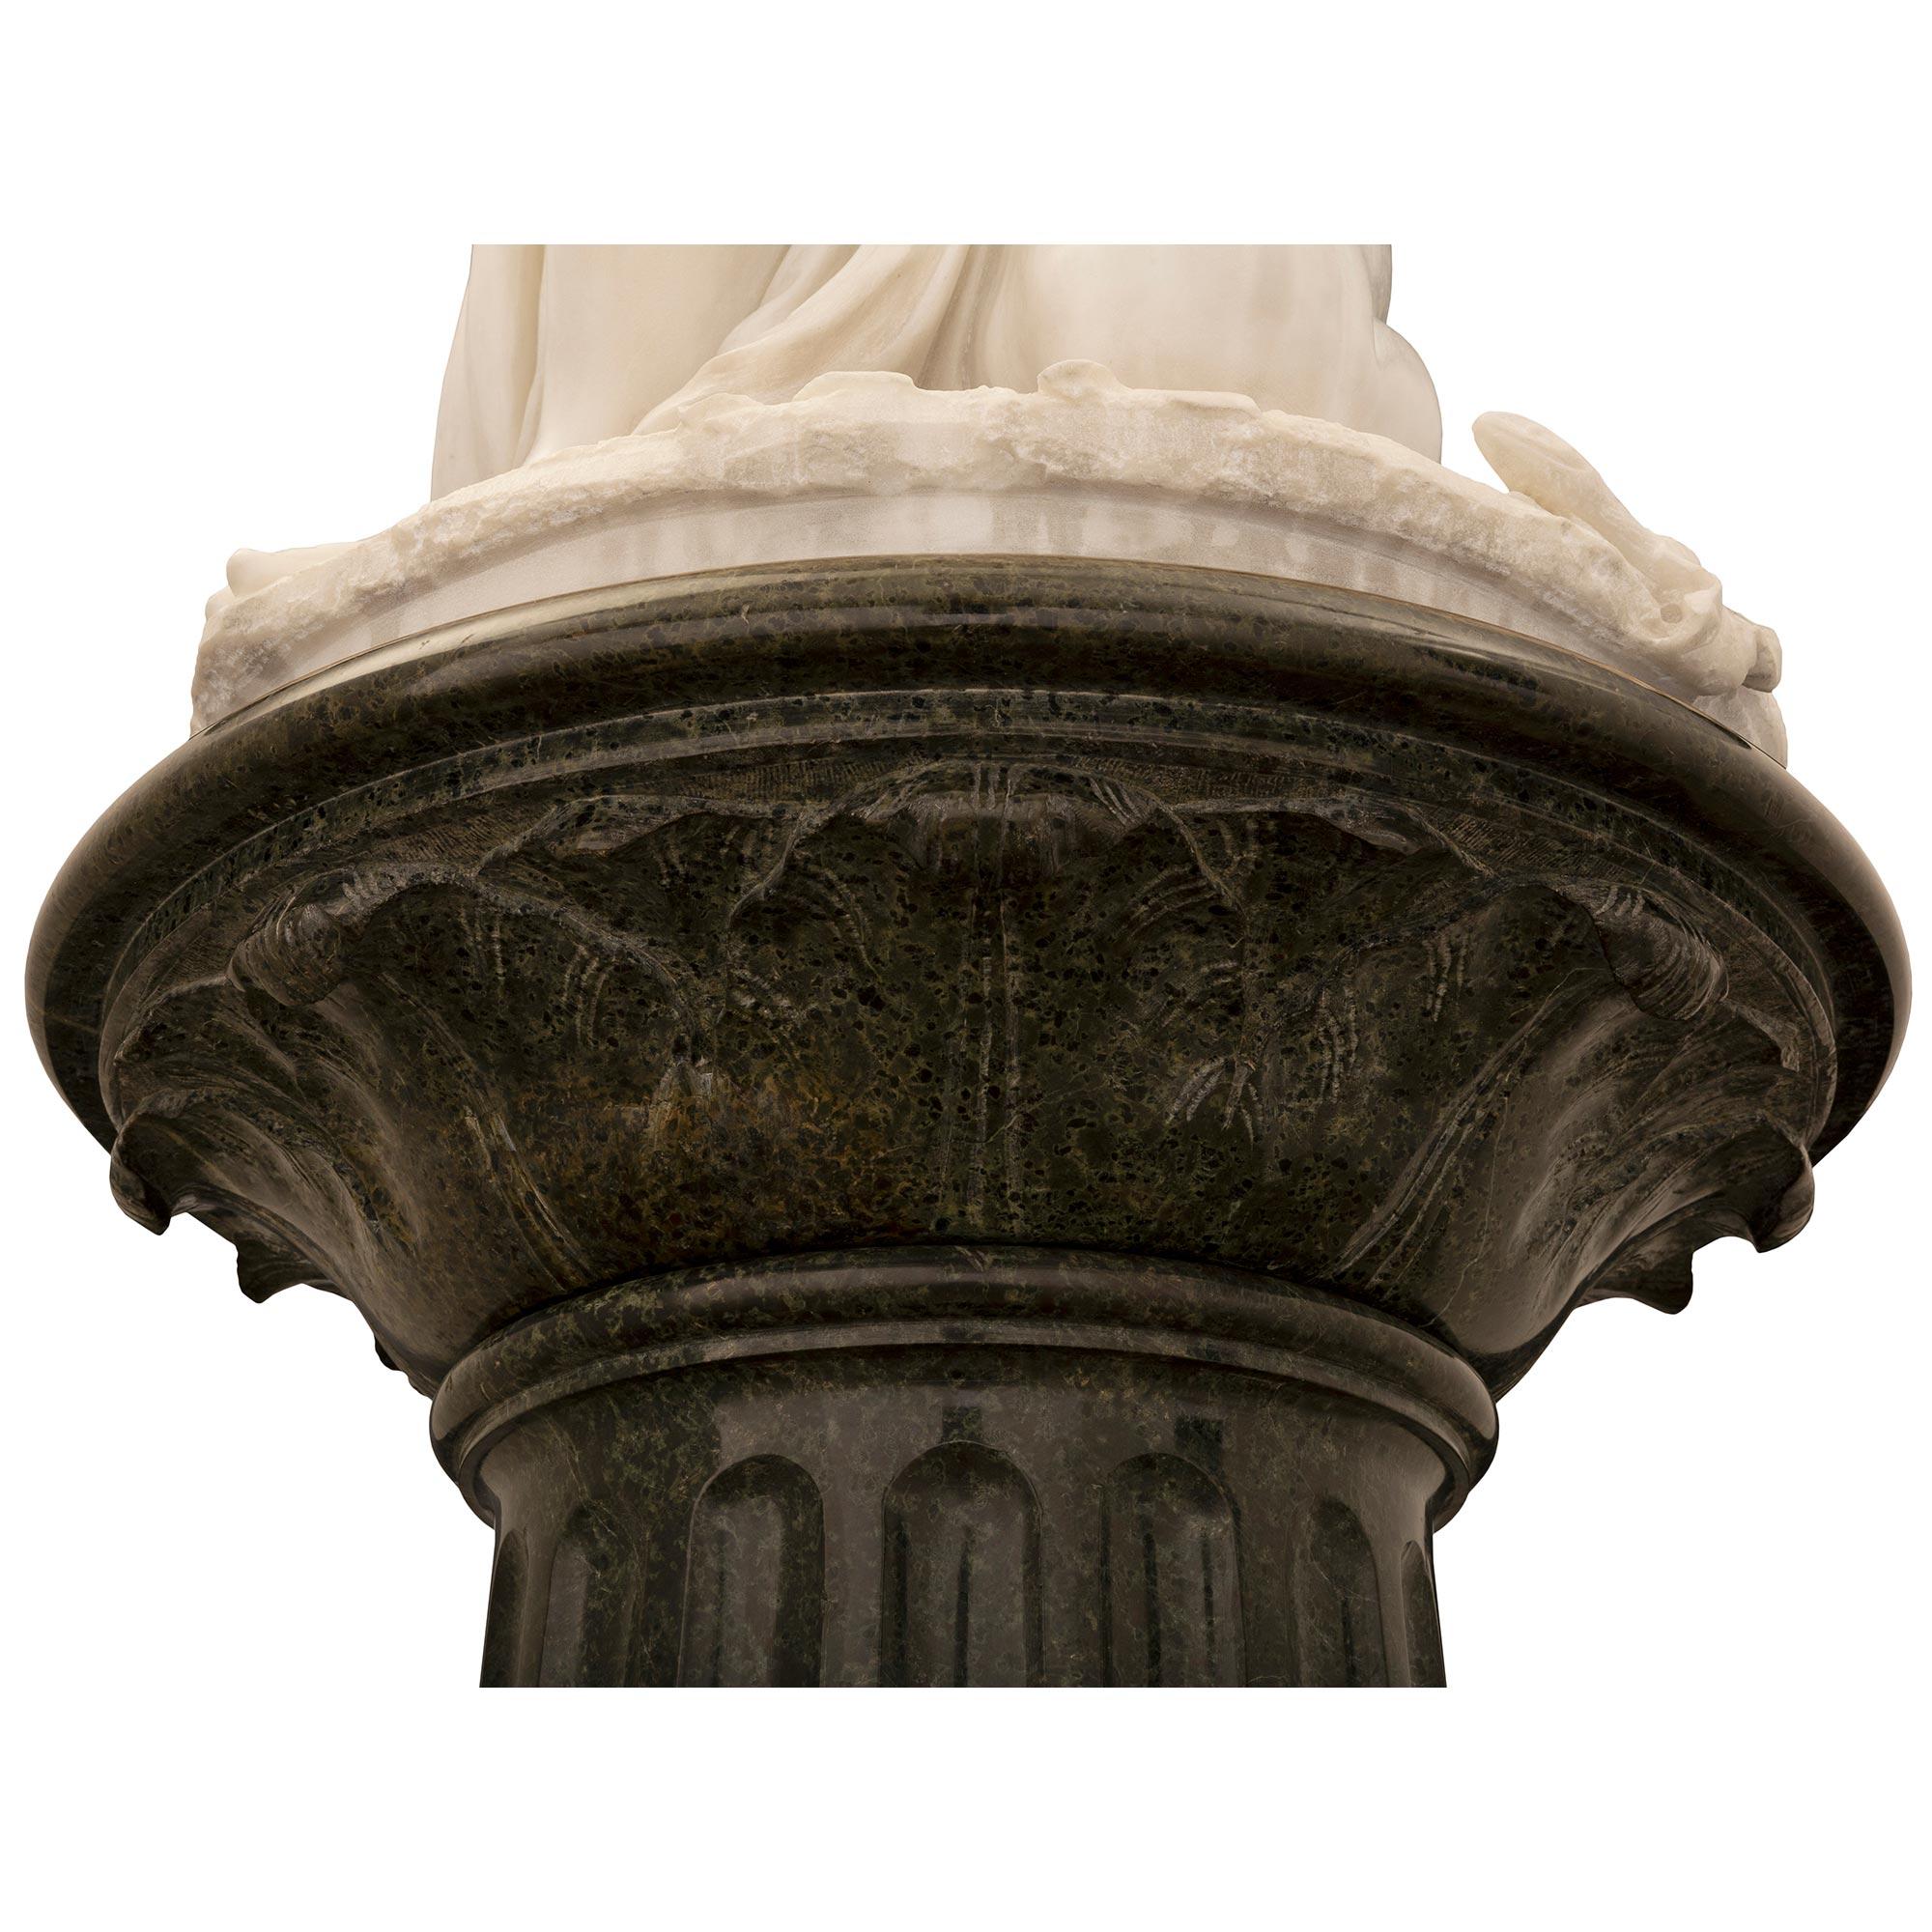 Italian 19th Century White Carrara Marble Statue on Its Original Pedestal For Sale 7